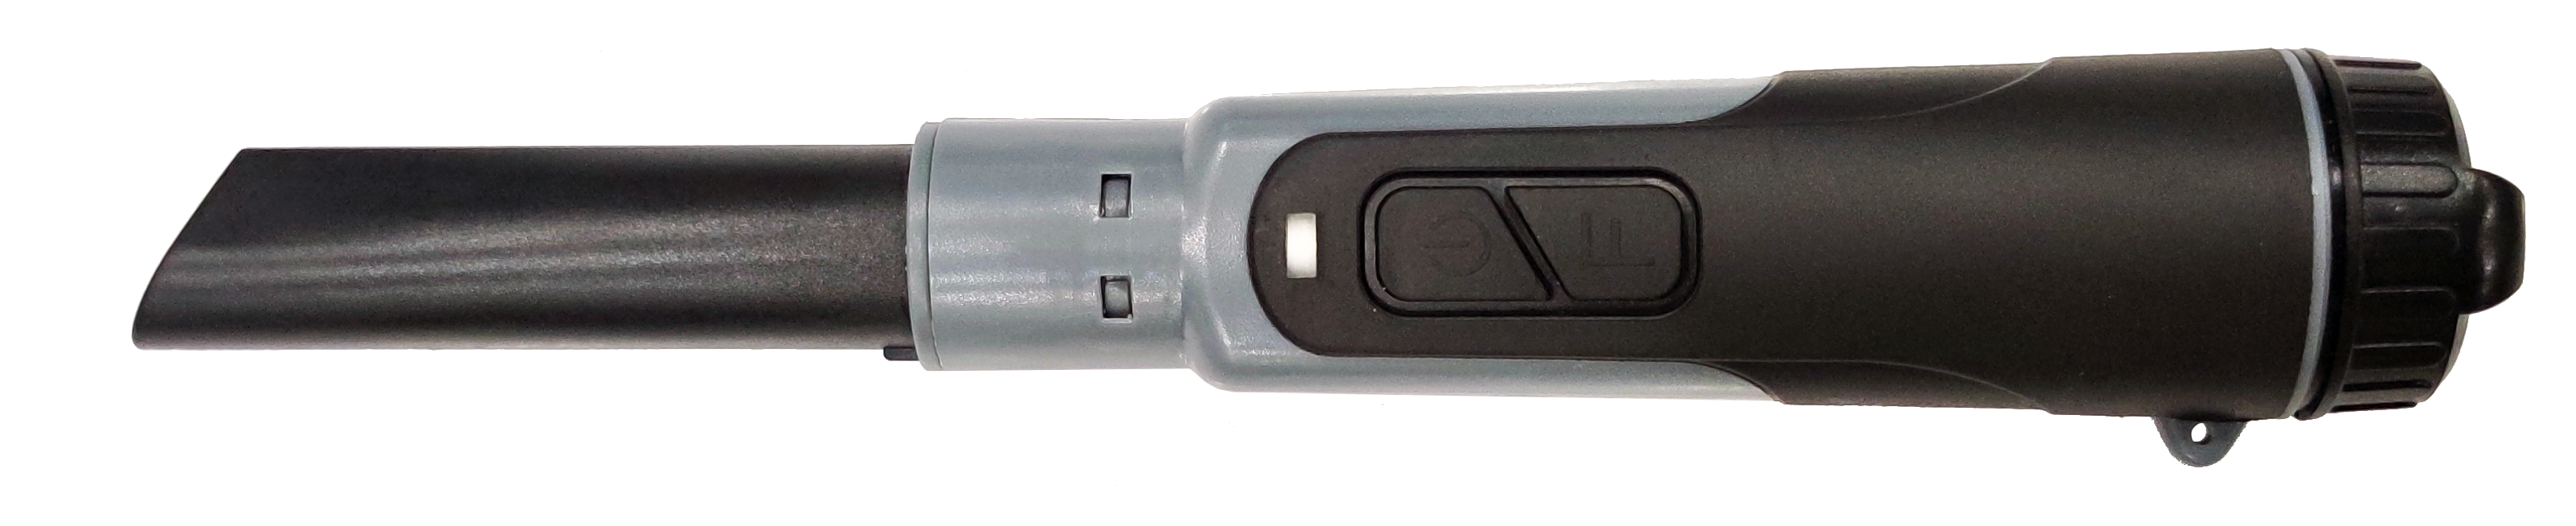 MWF MF-90 Multi Pin Pointer Metal Detector